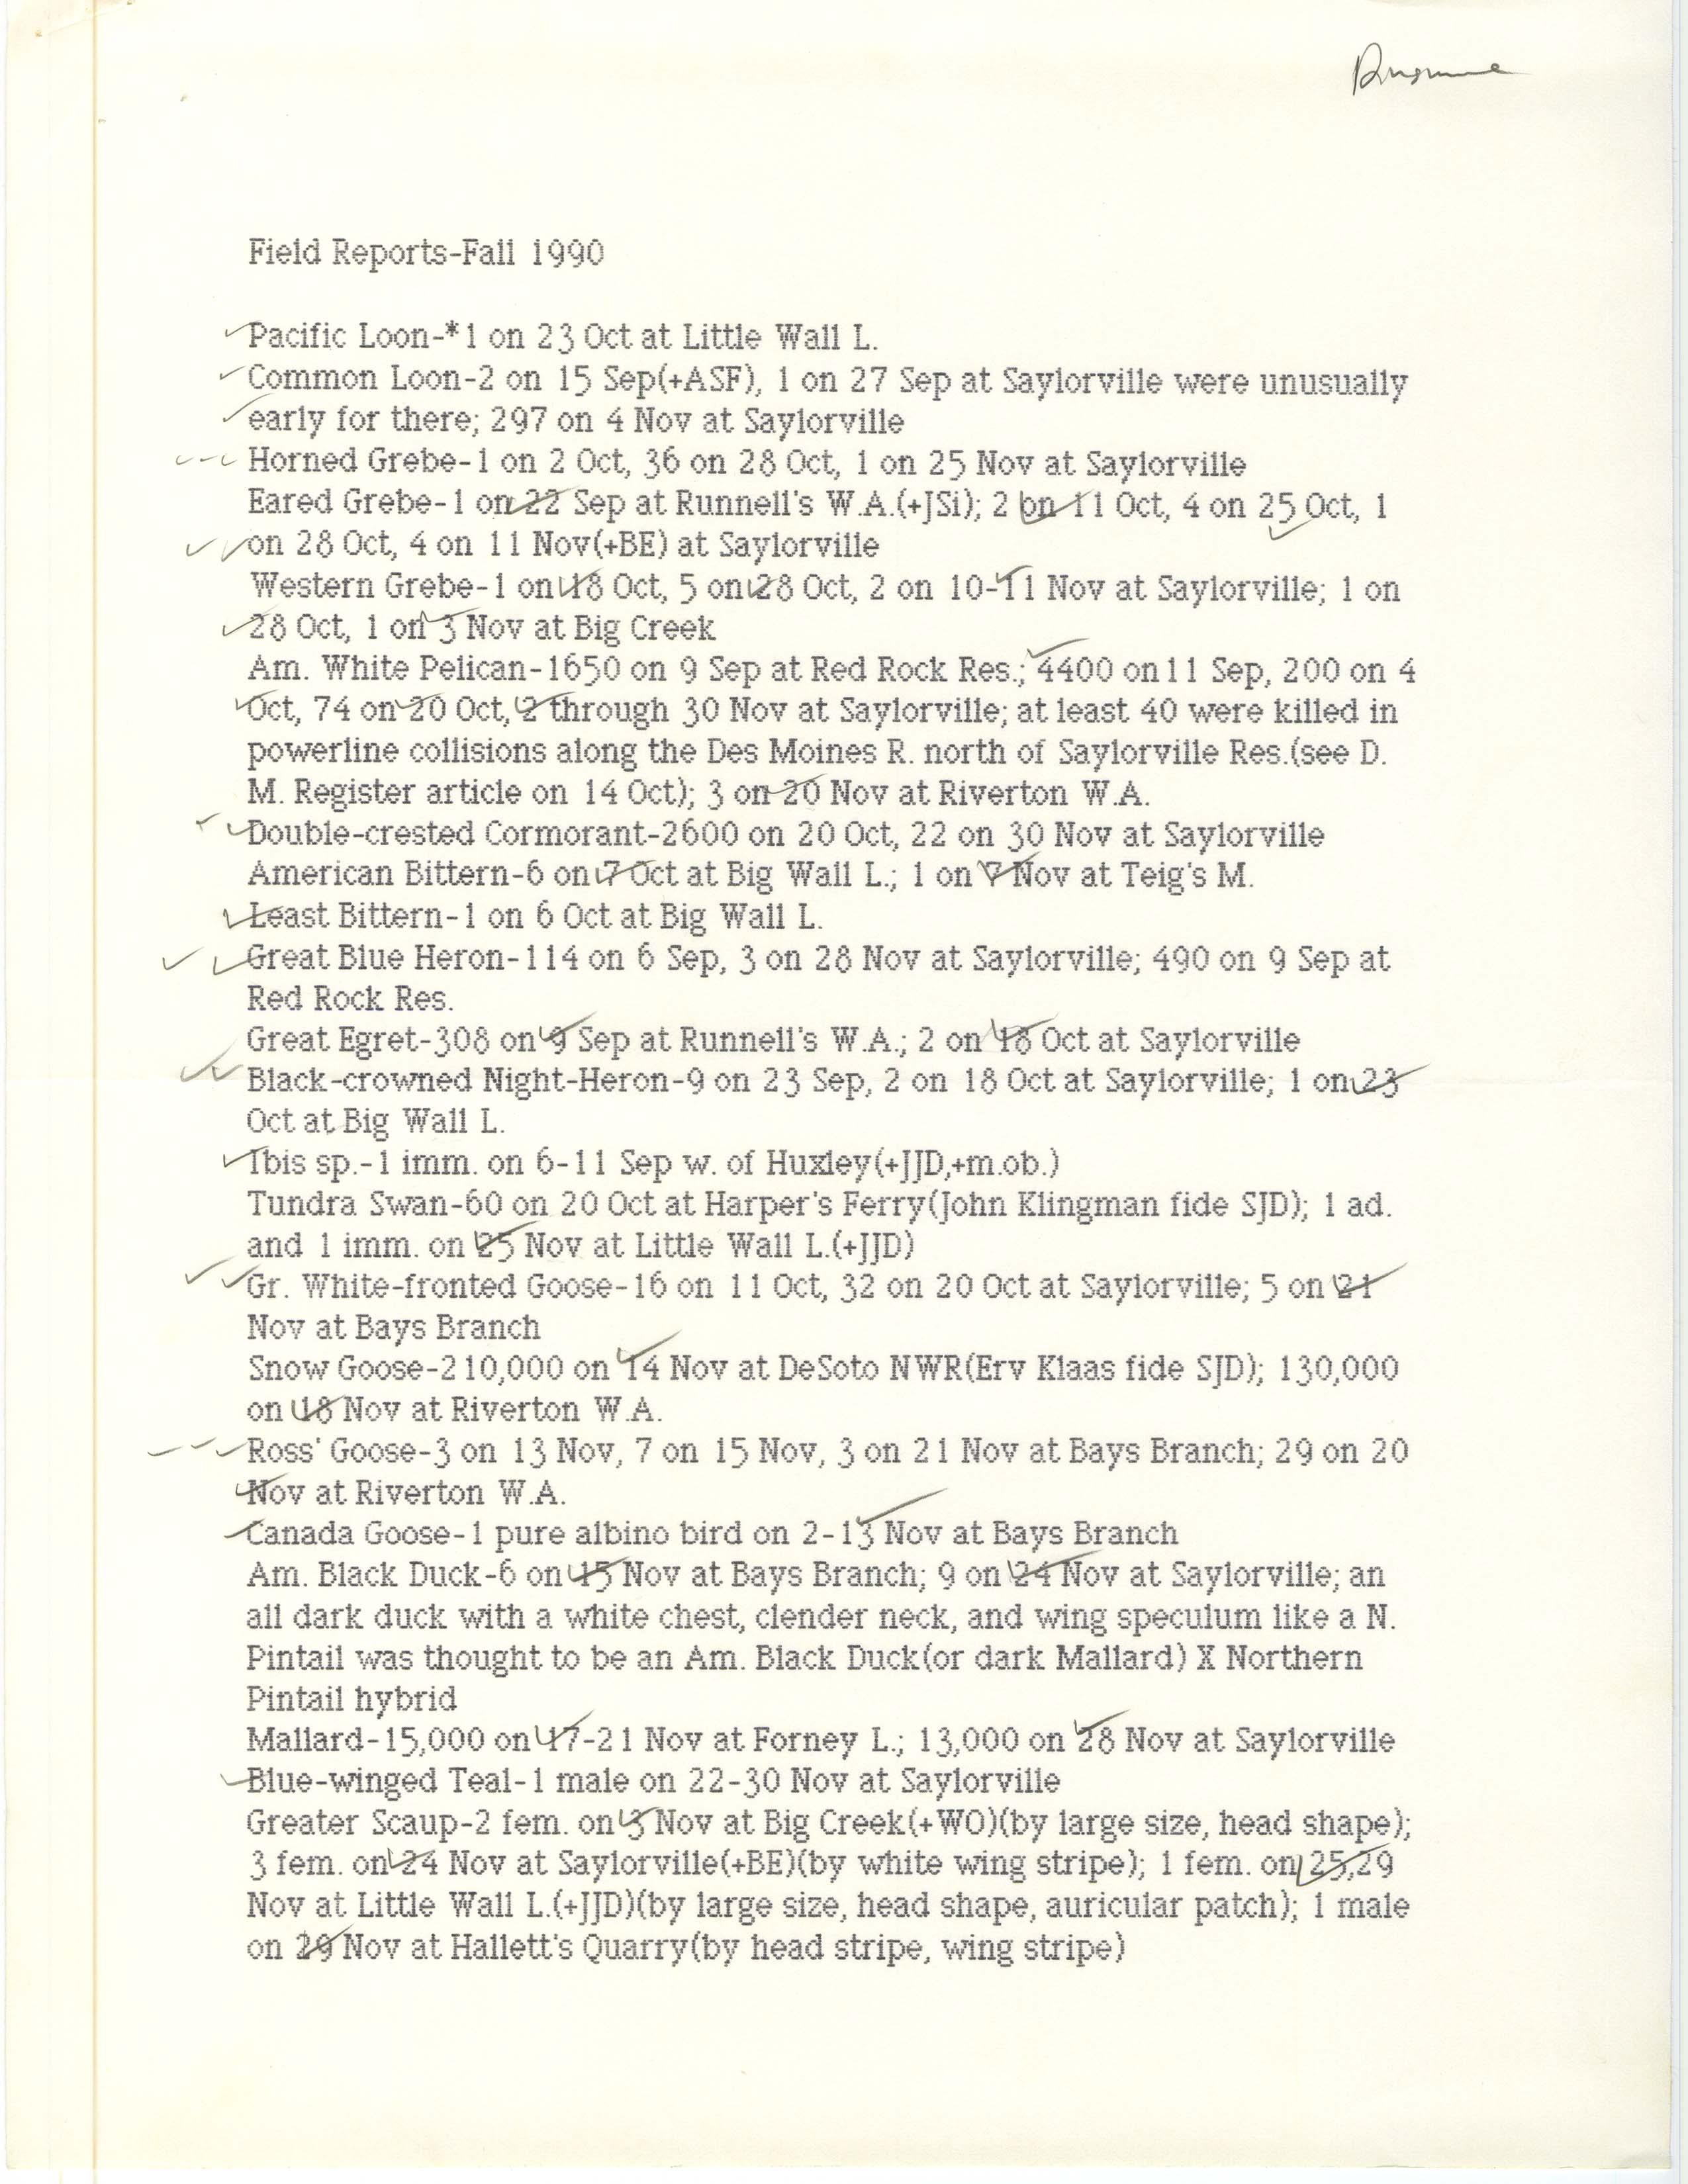 Field reports, Steve Dinsmore, fall 1990